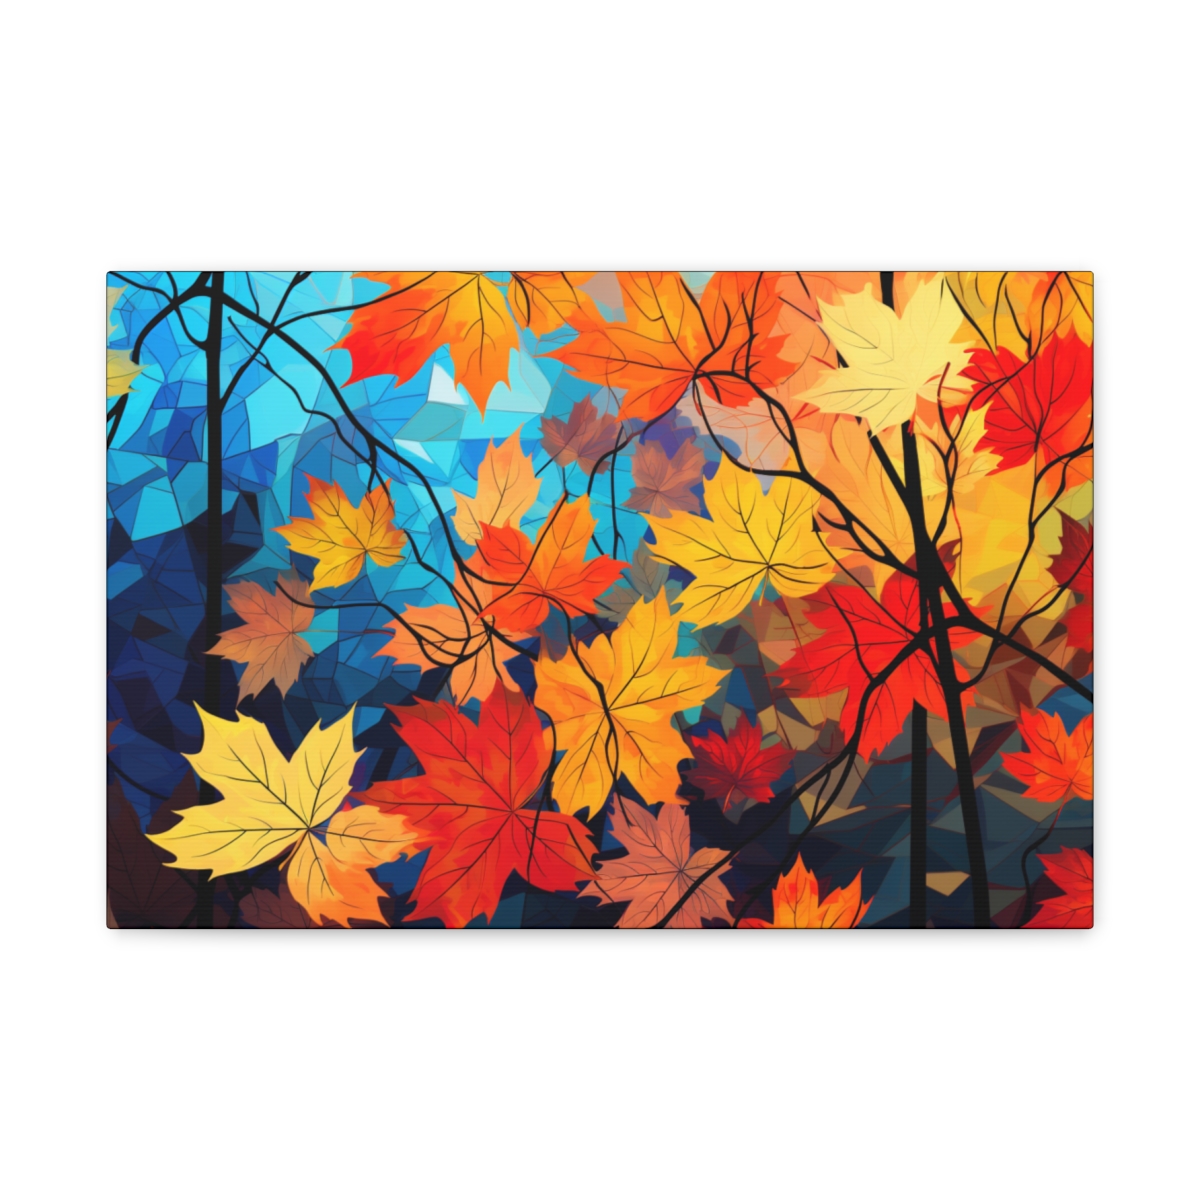 Autumn Forest Wall Art Canvas Print: Foliage Fantasy